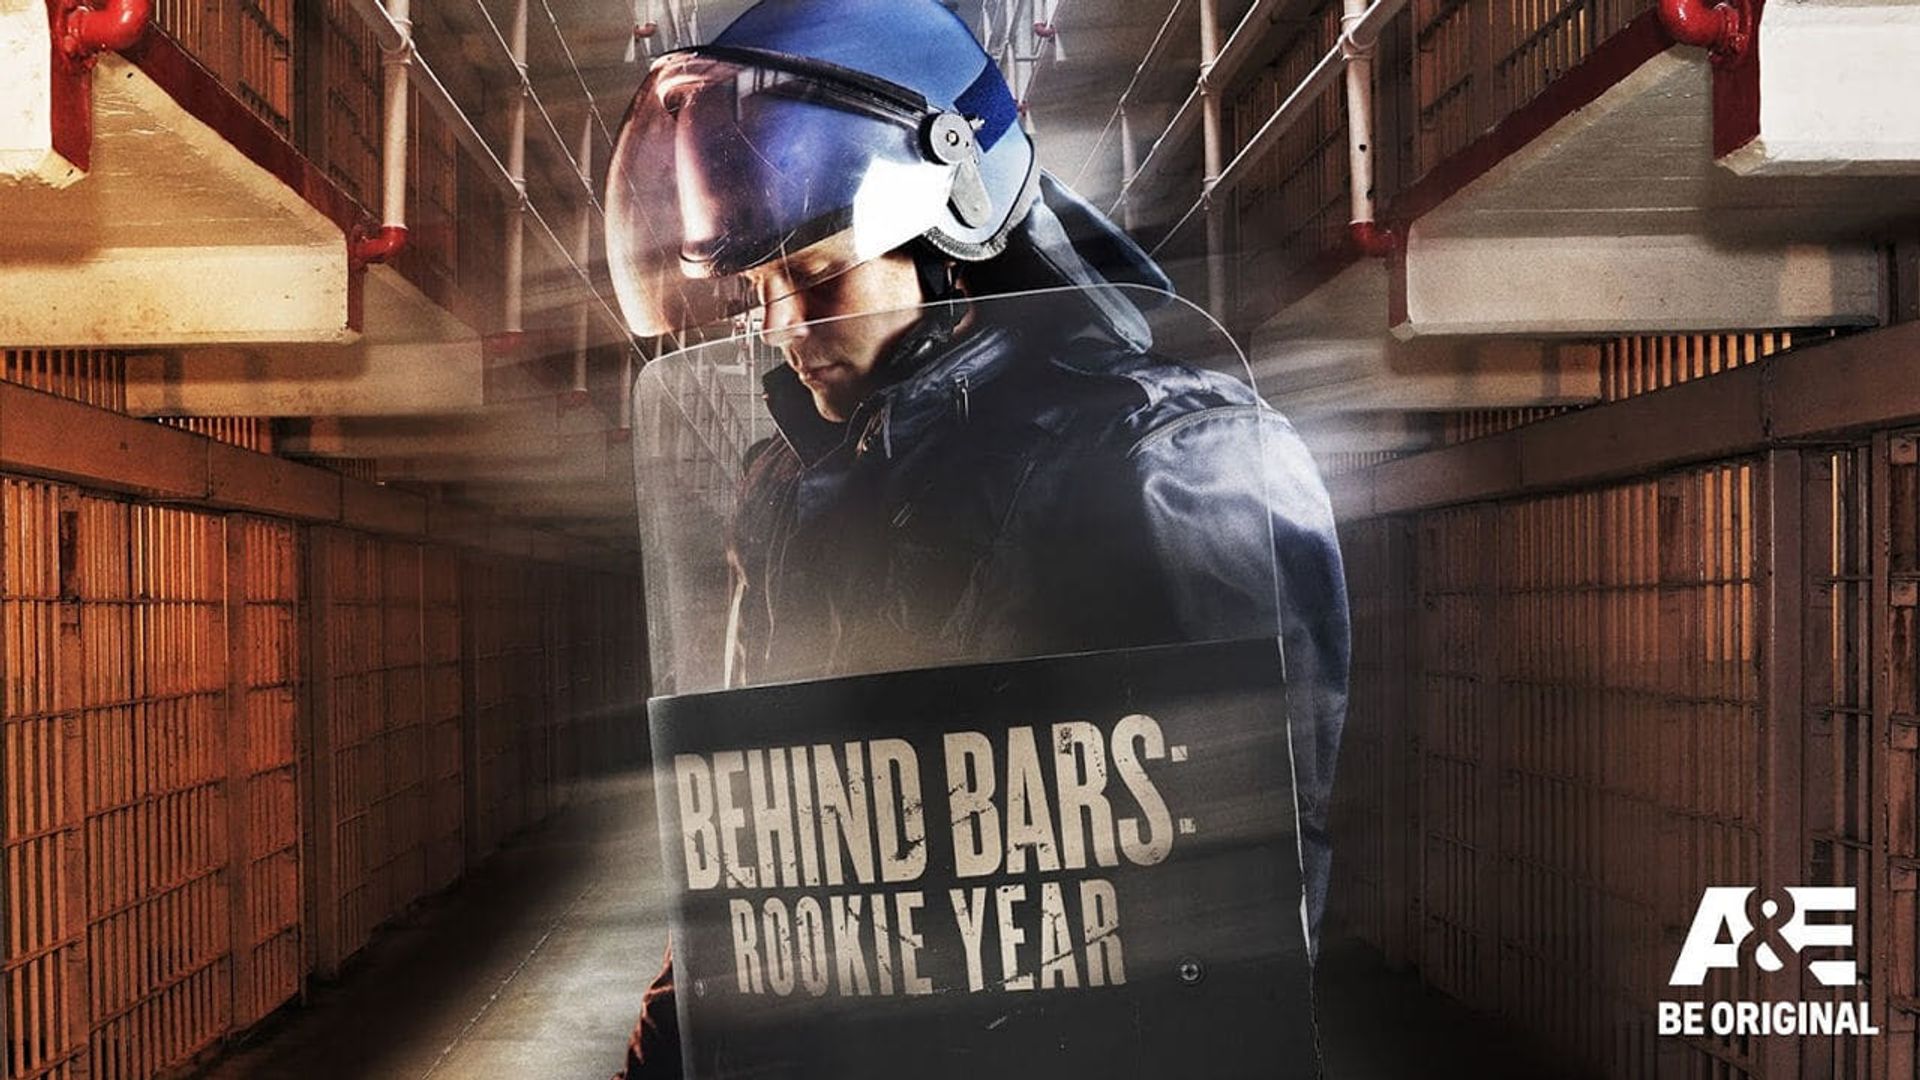 Behind Bars: Rookie Year background